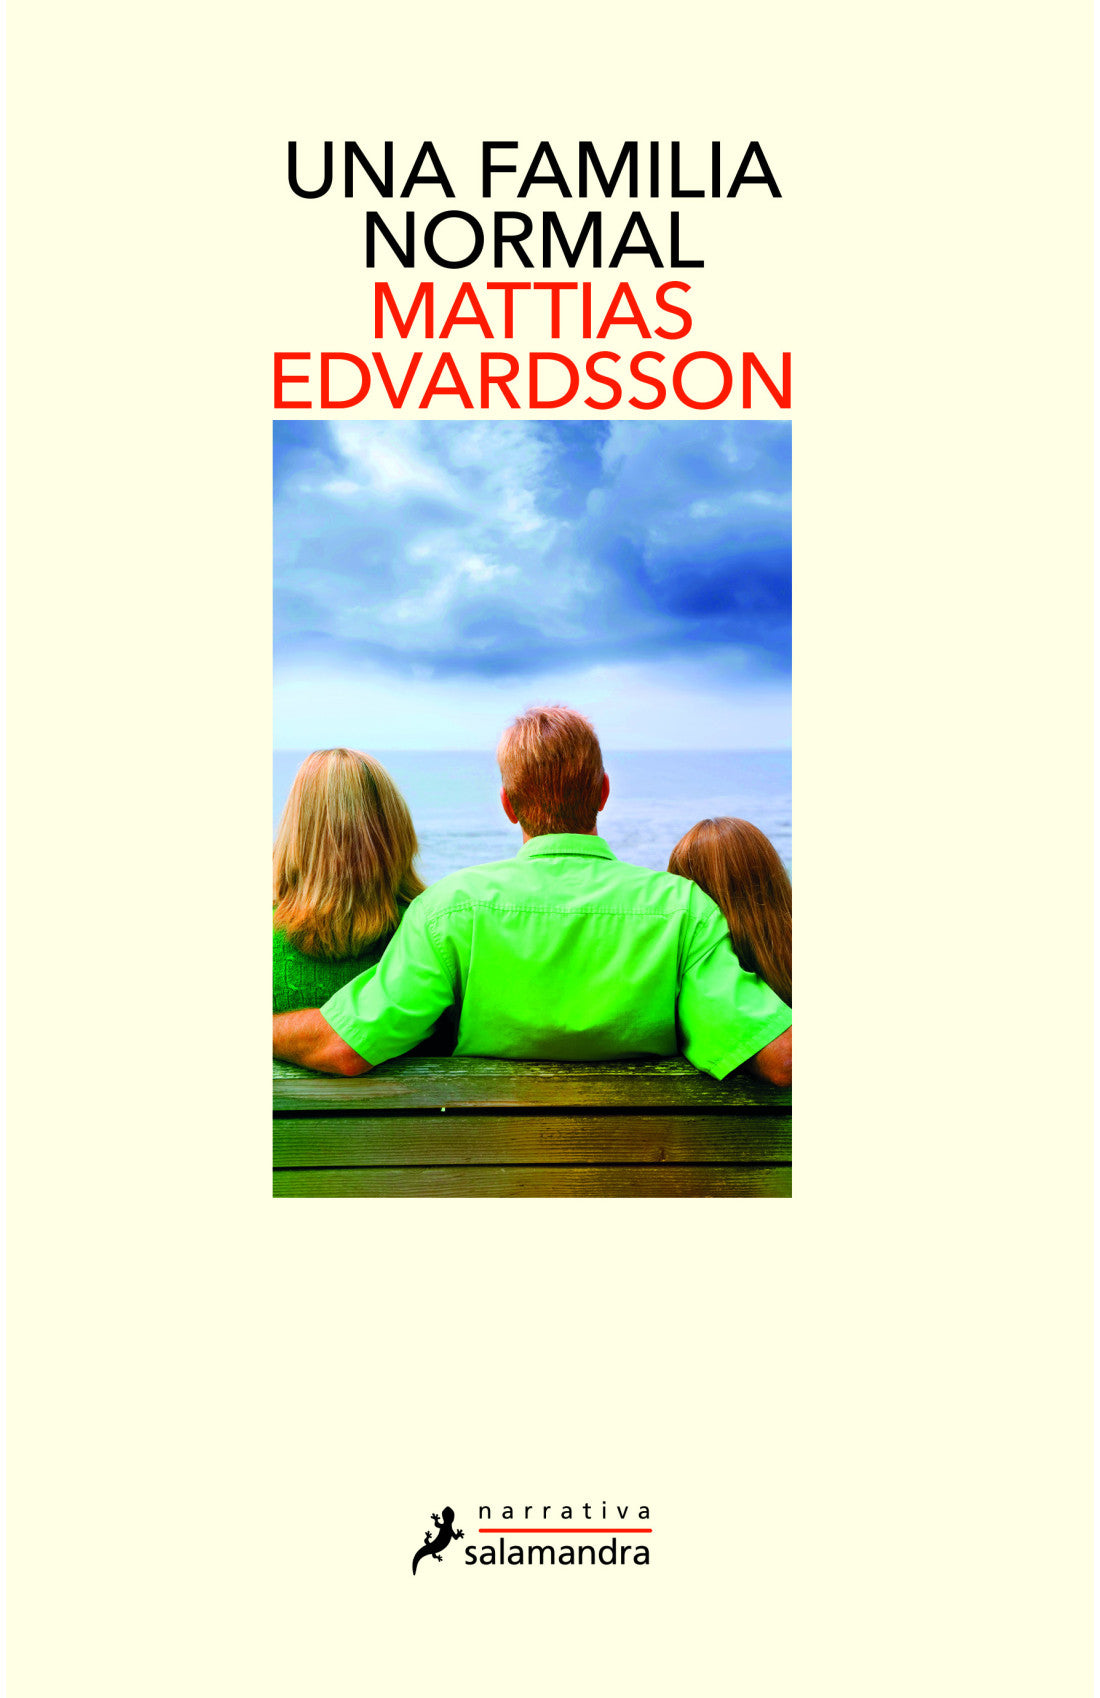 Libro Mattias Edvardsson - Una familia normal